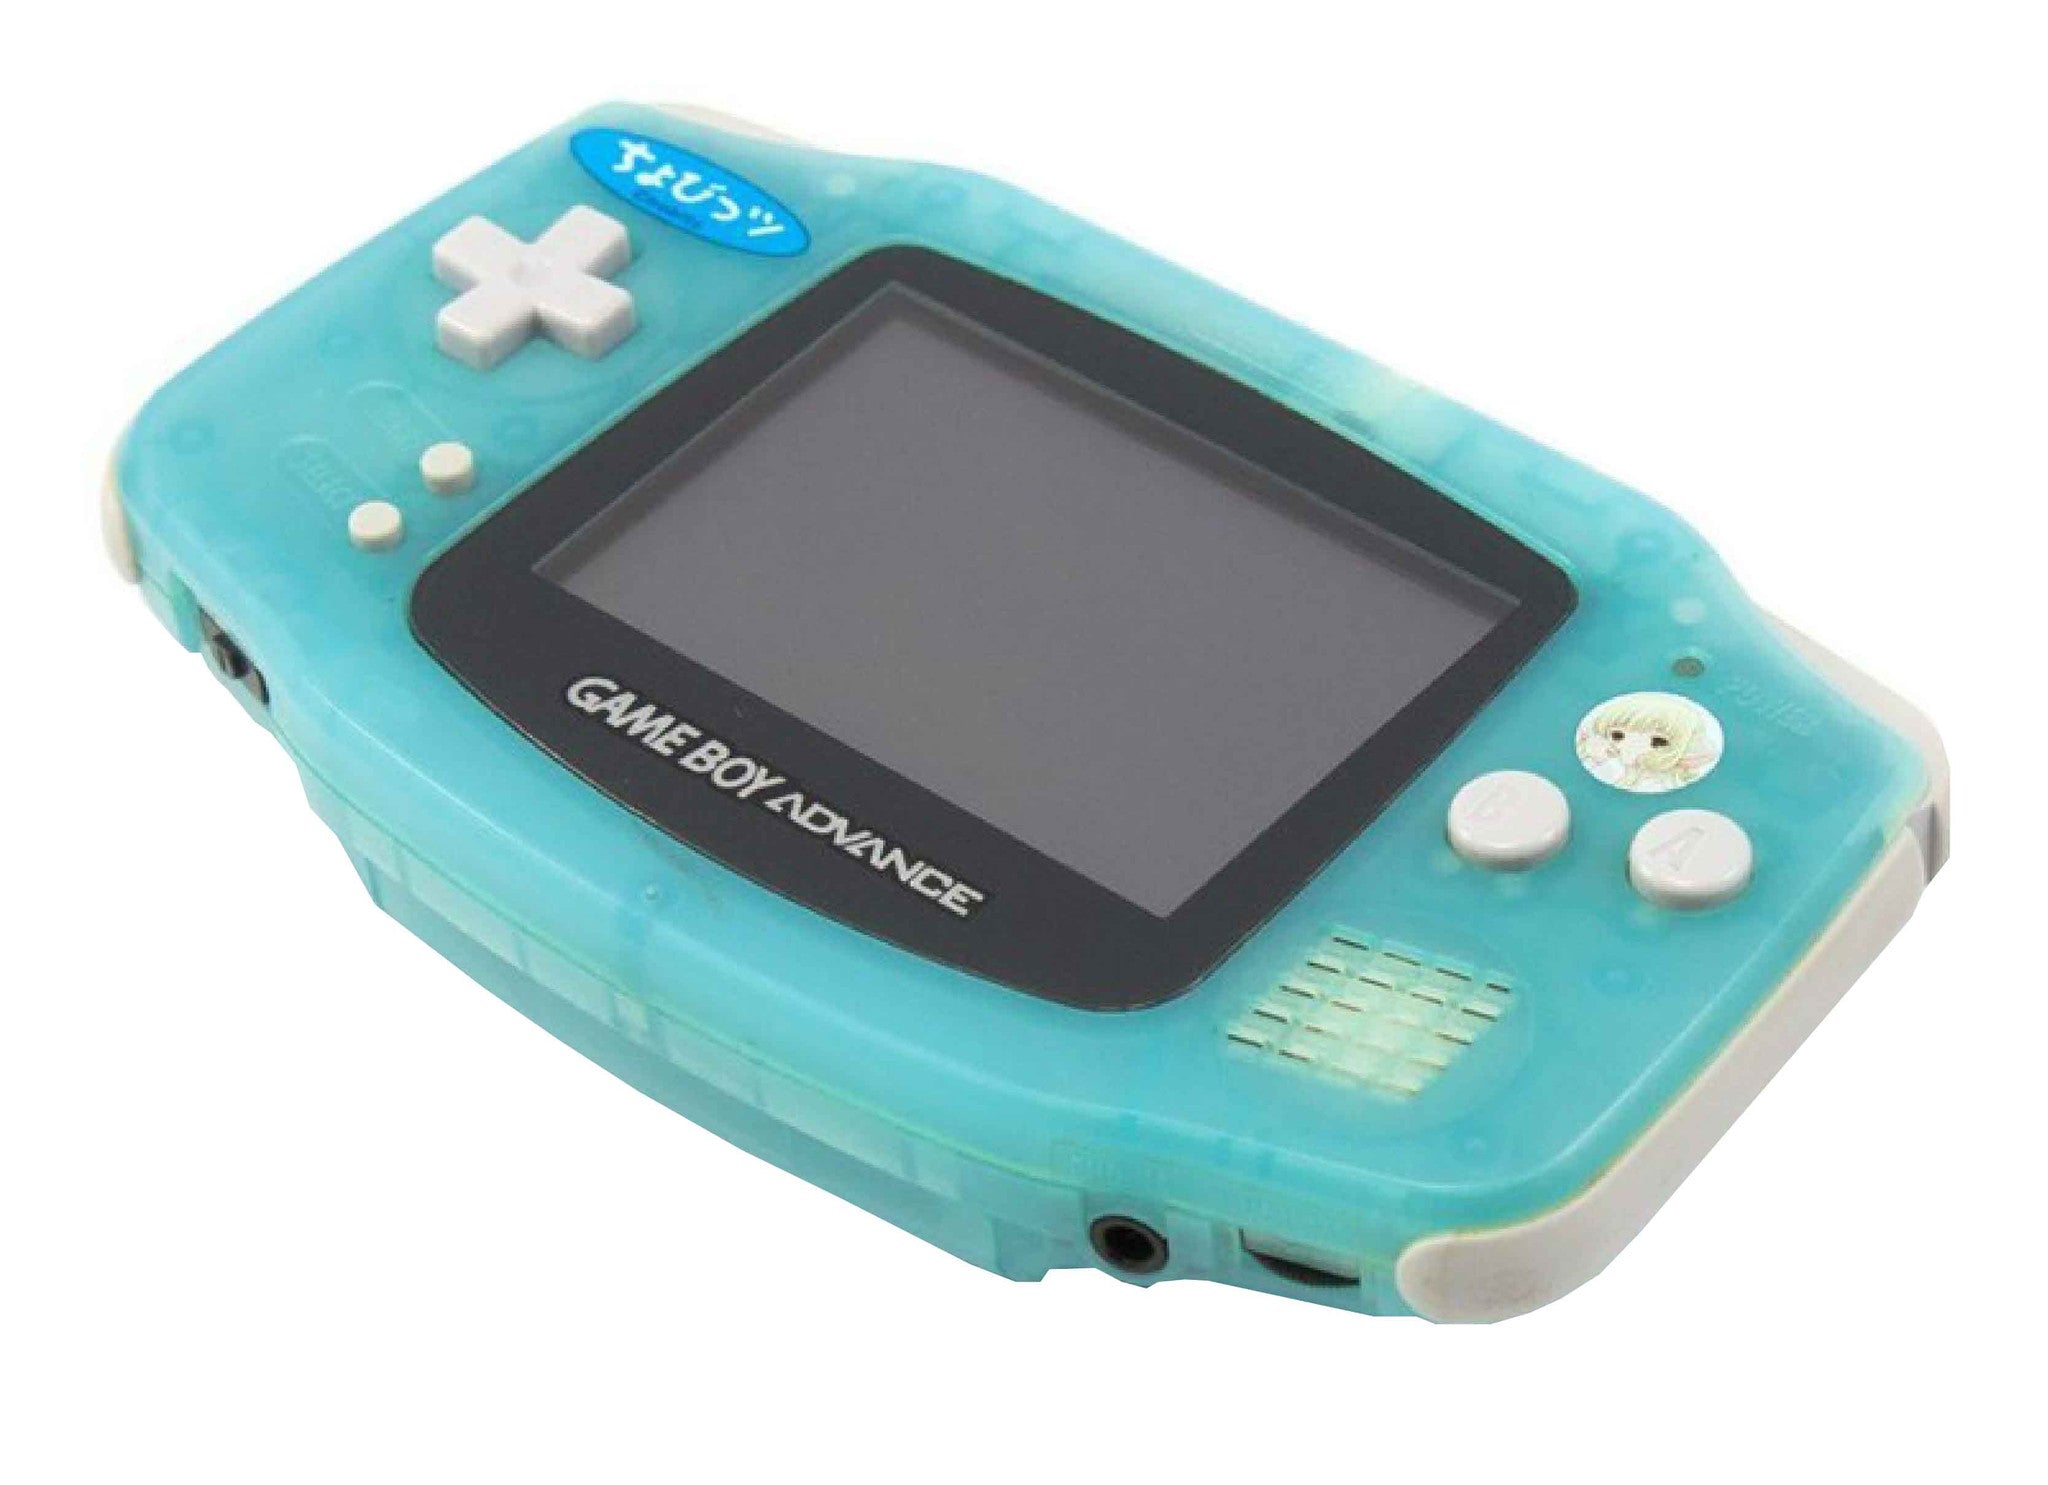 Nintendo Game Boy Advance Chobits Retropixl Retrogaming retro gaming Rare Console Collector Limited Edition Japan Import